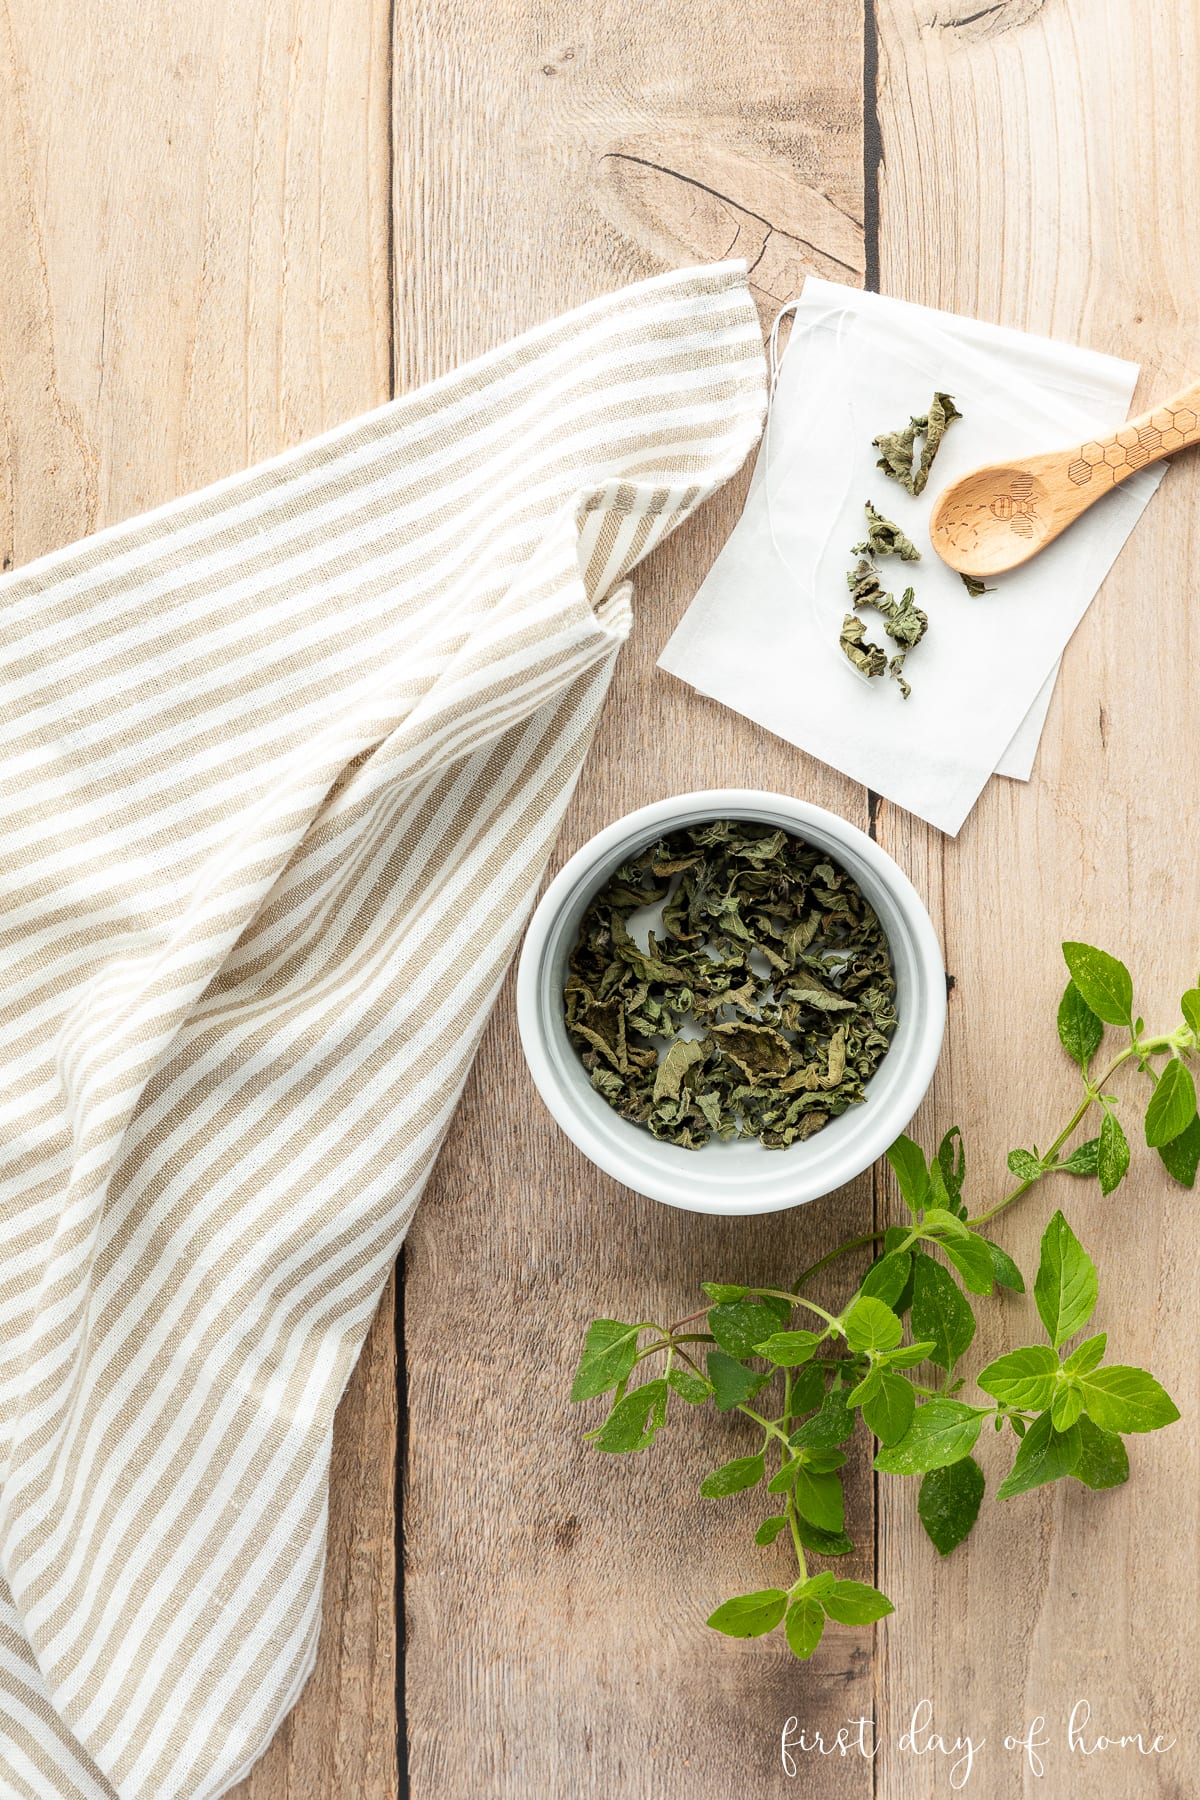 Dried herbal tea leaves shown with fresh herbs, tea bags, wooden spoon, and tea towel.